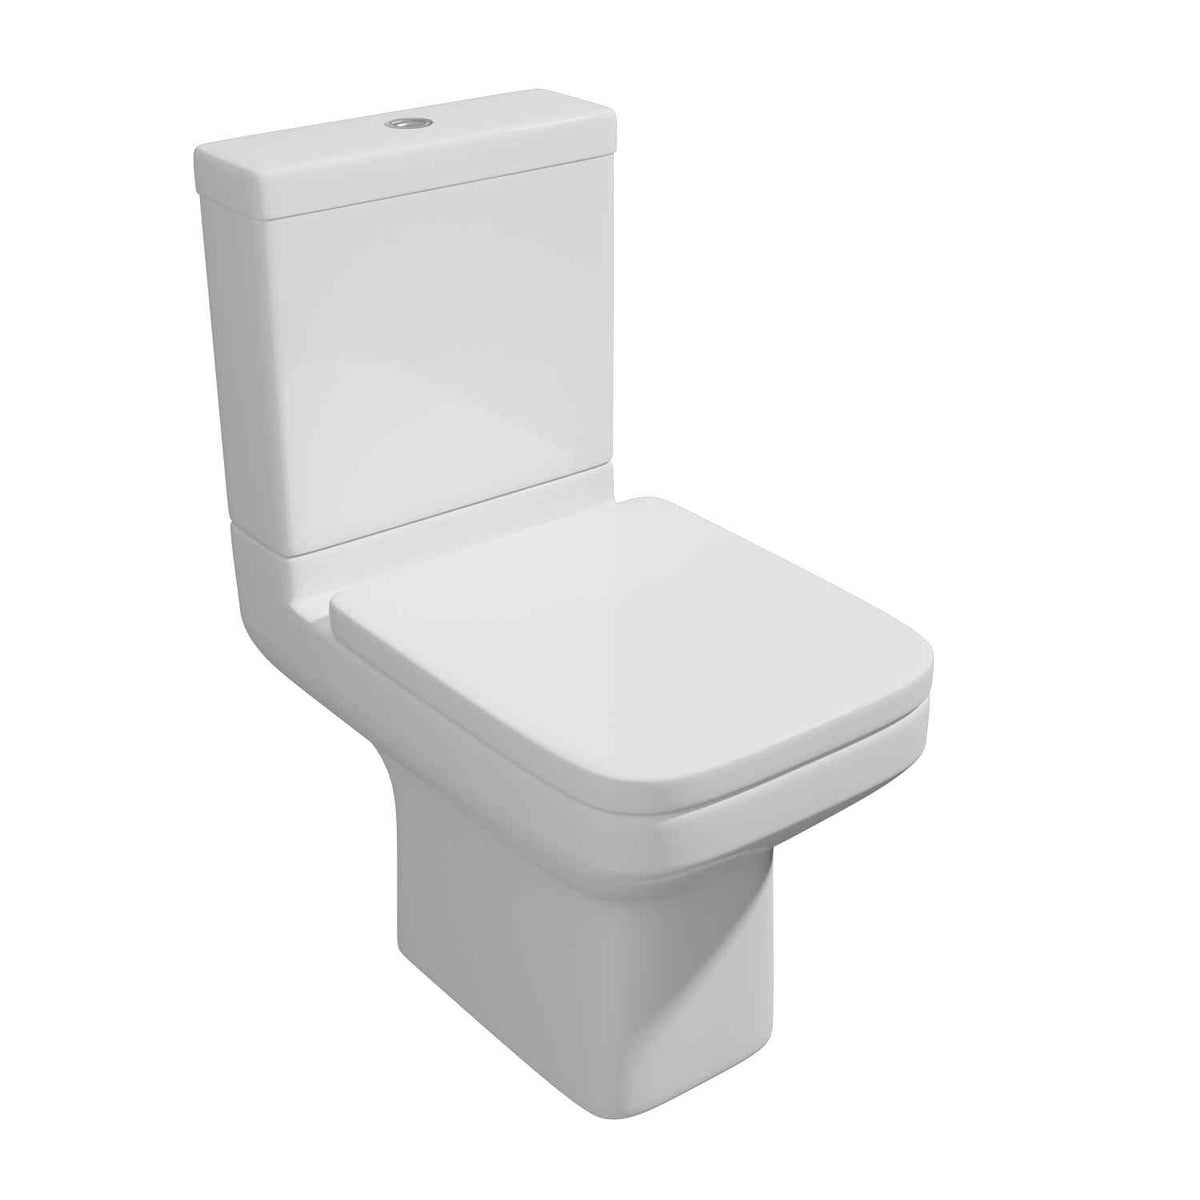 Kartell UK Trim Compact Corner WC Pan with Soft Close Seat